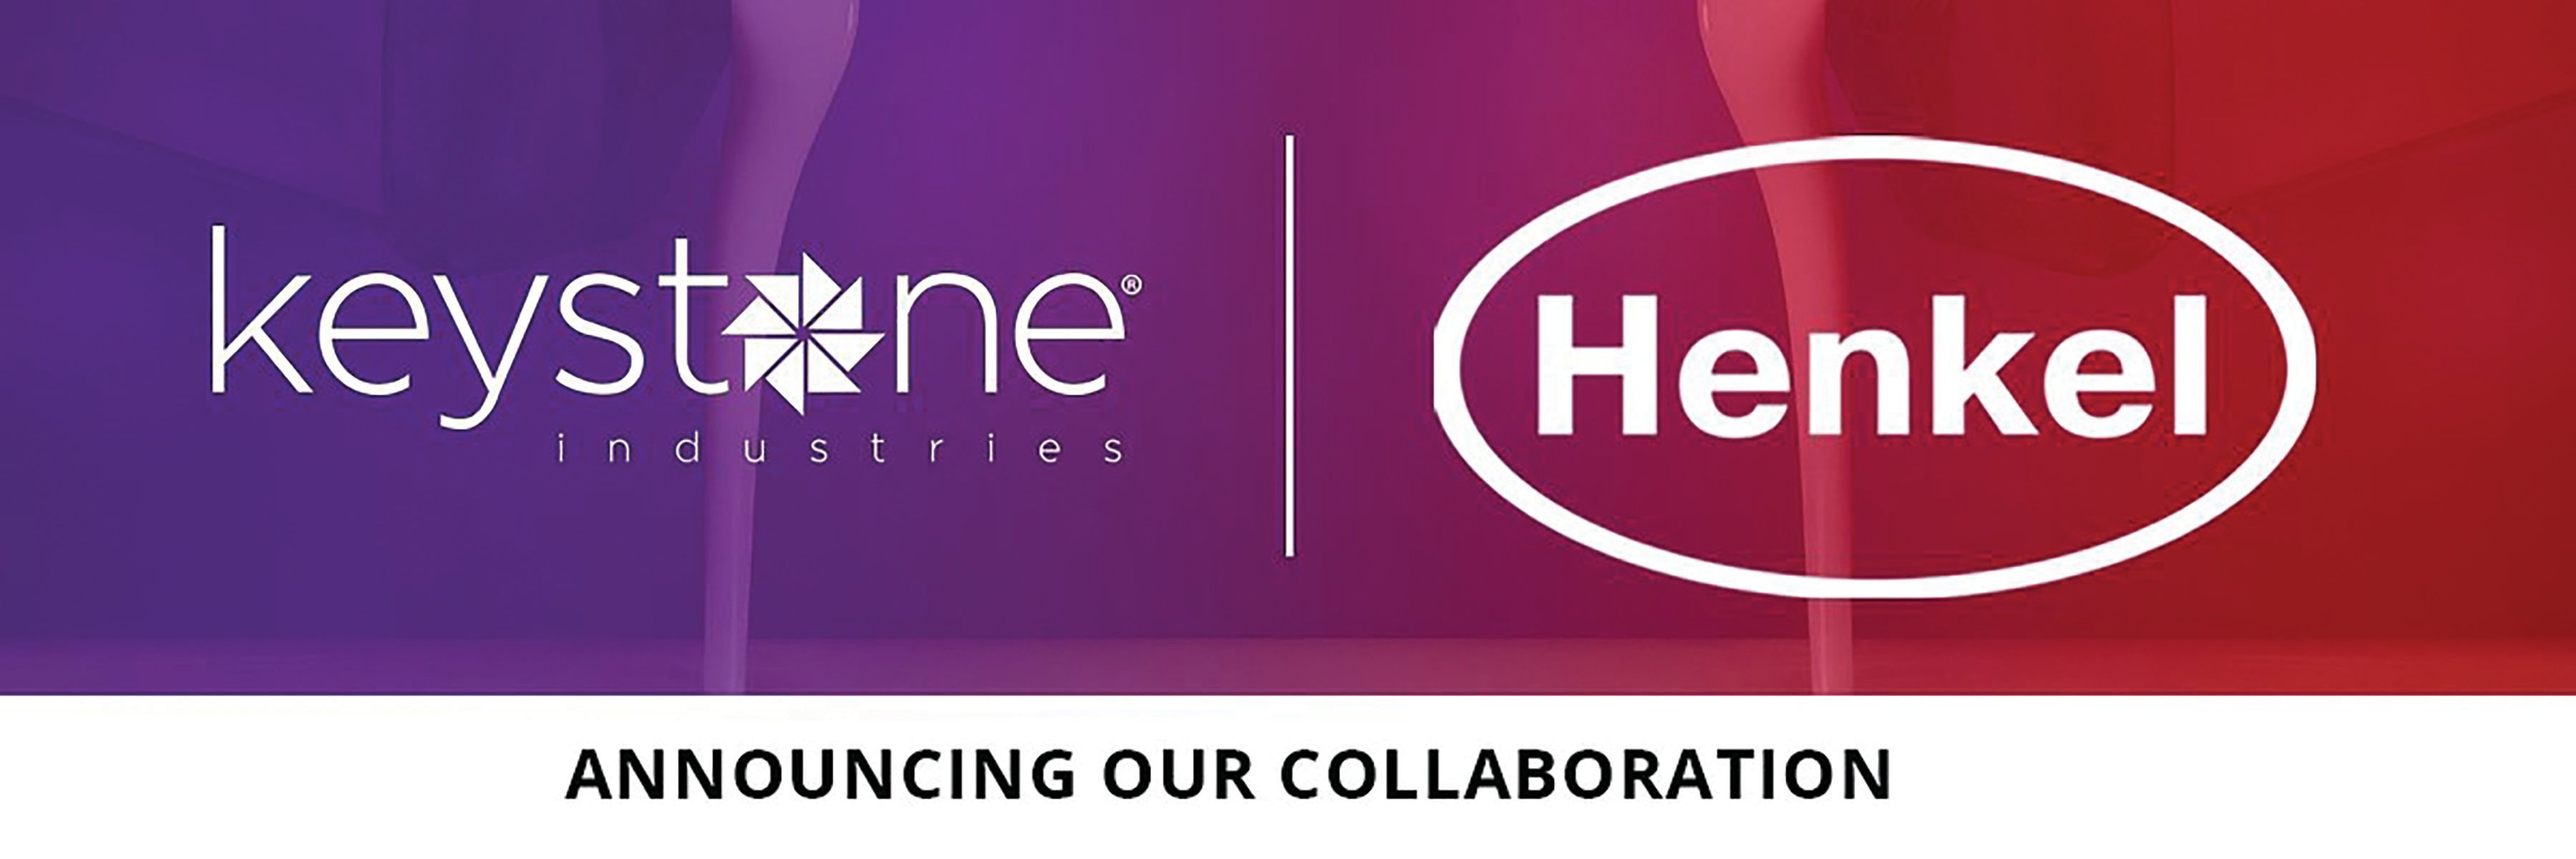 Keystone, Henkel Announce New Partnership